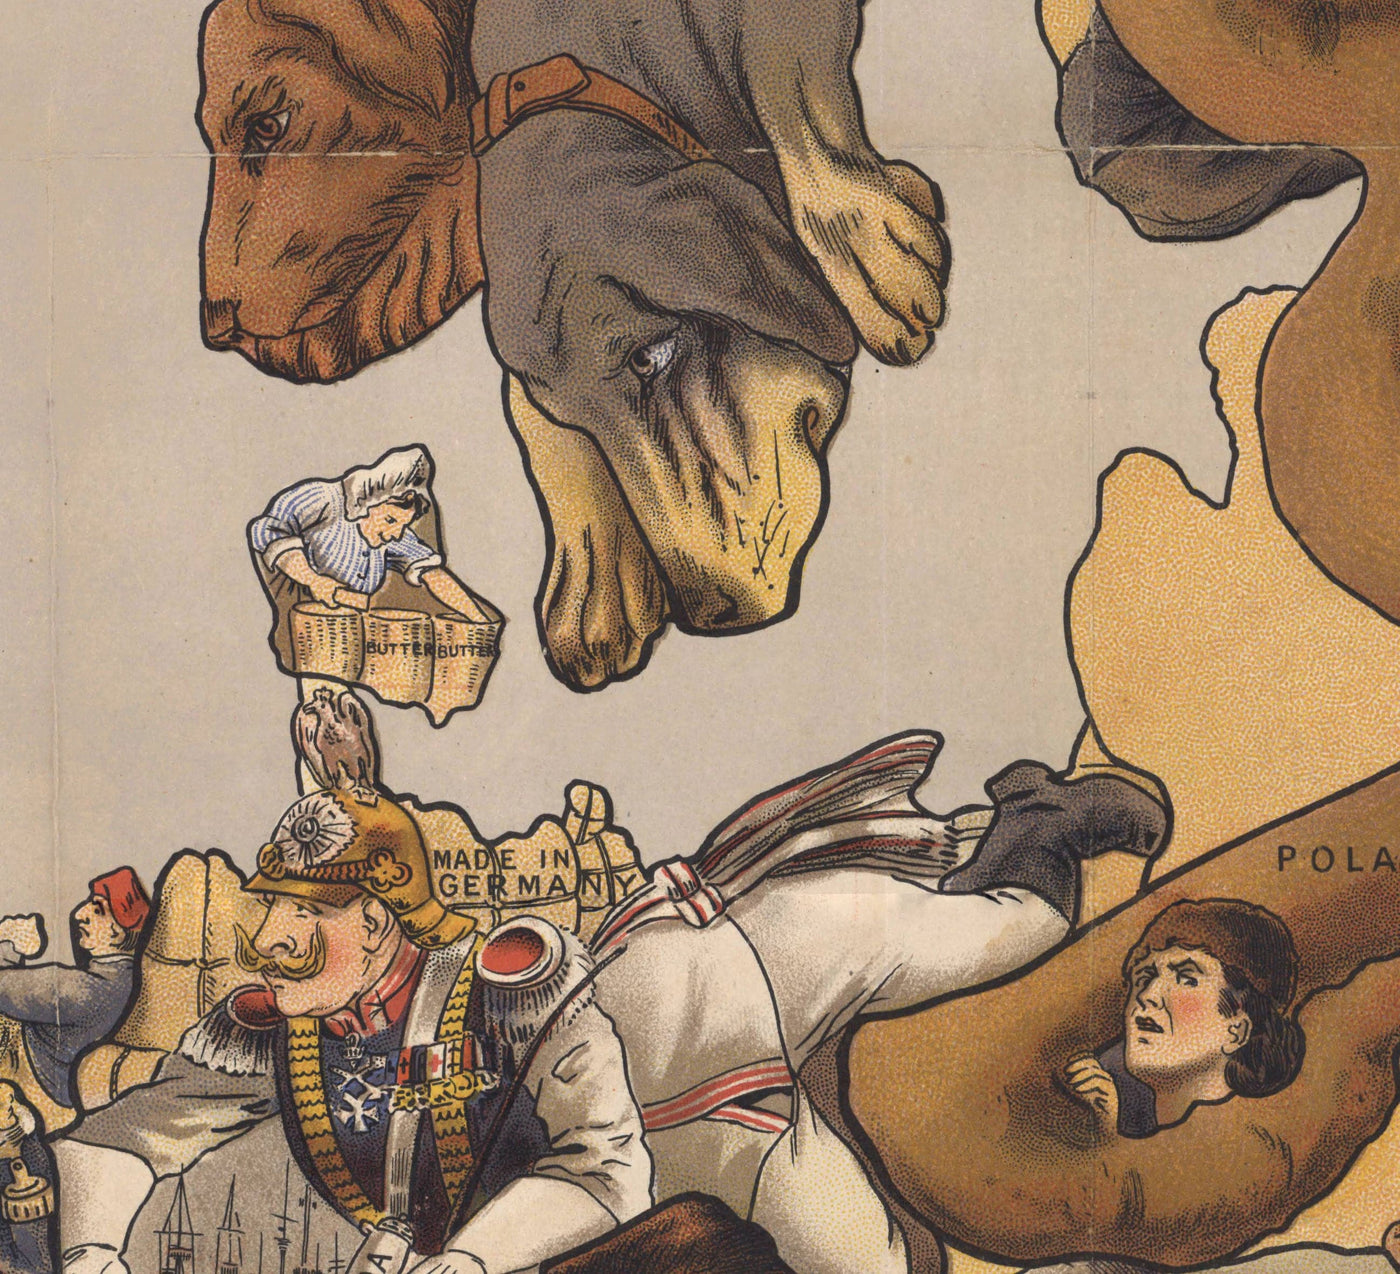 Vieille carte satirique de l'Europe, 1900 de Fredrick Rose - John Bull Propaganda Serio-Comic, Octopus Nikolai II Empire russe